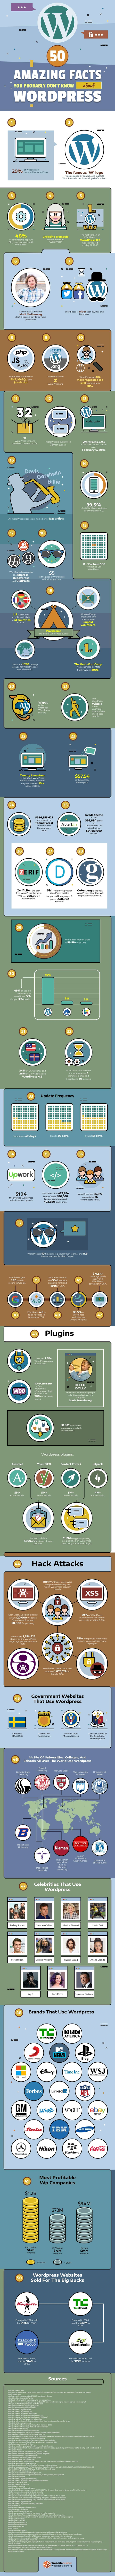 Fascinating Interesting Statistics 50 amazing Fact About WordPress - Infographic